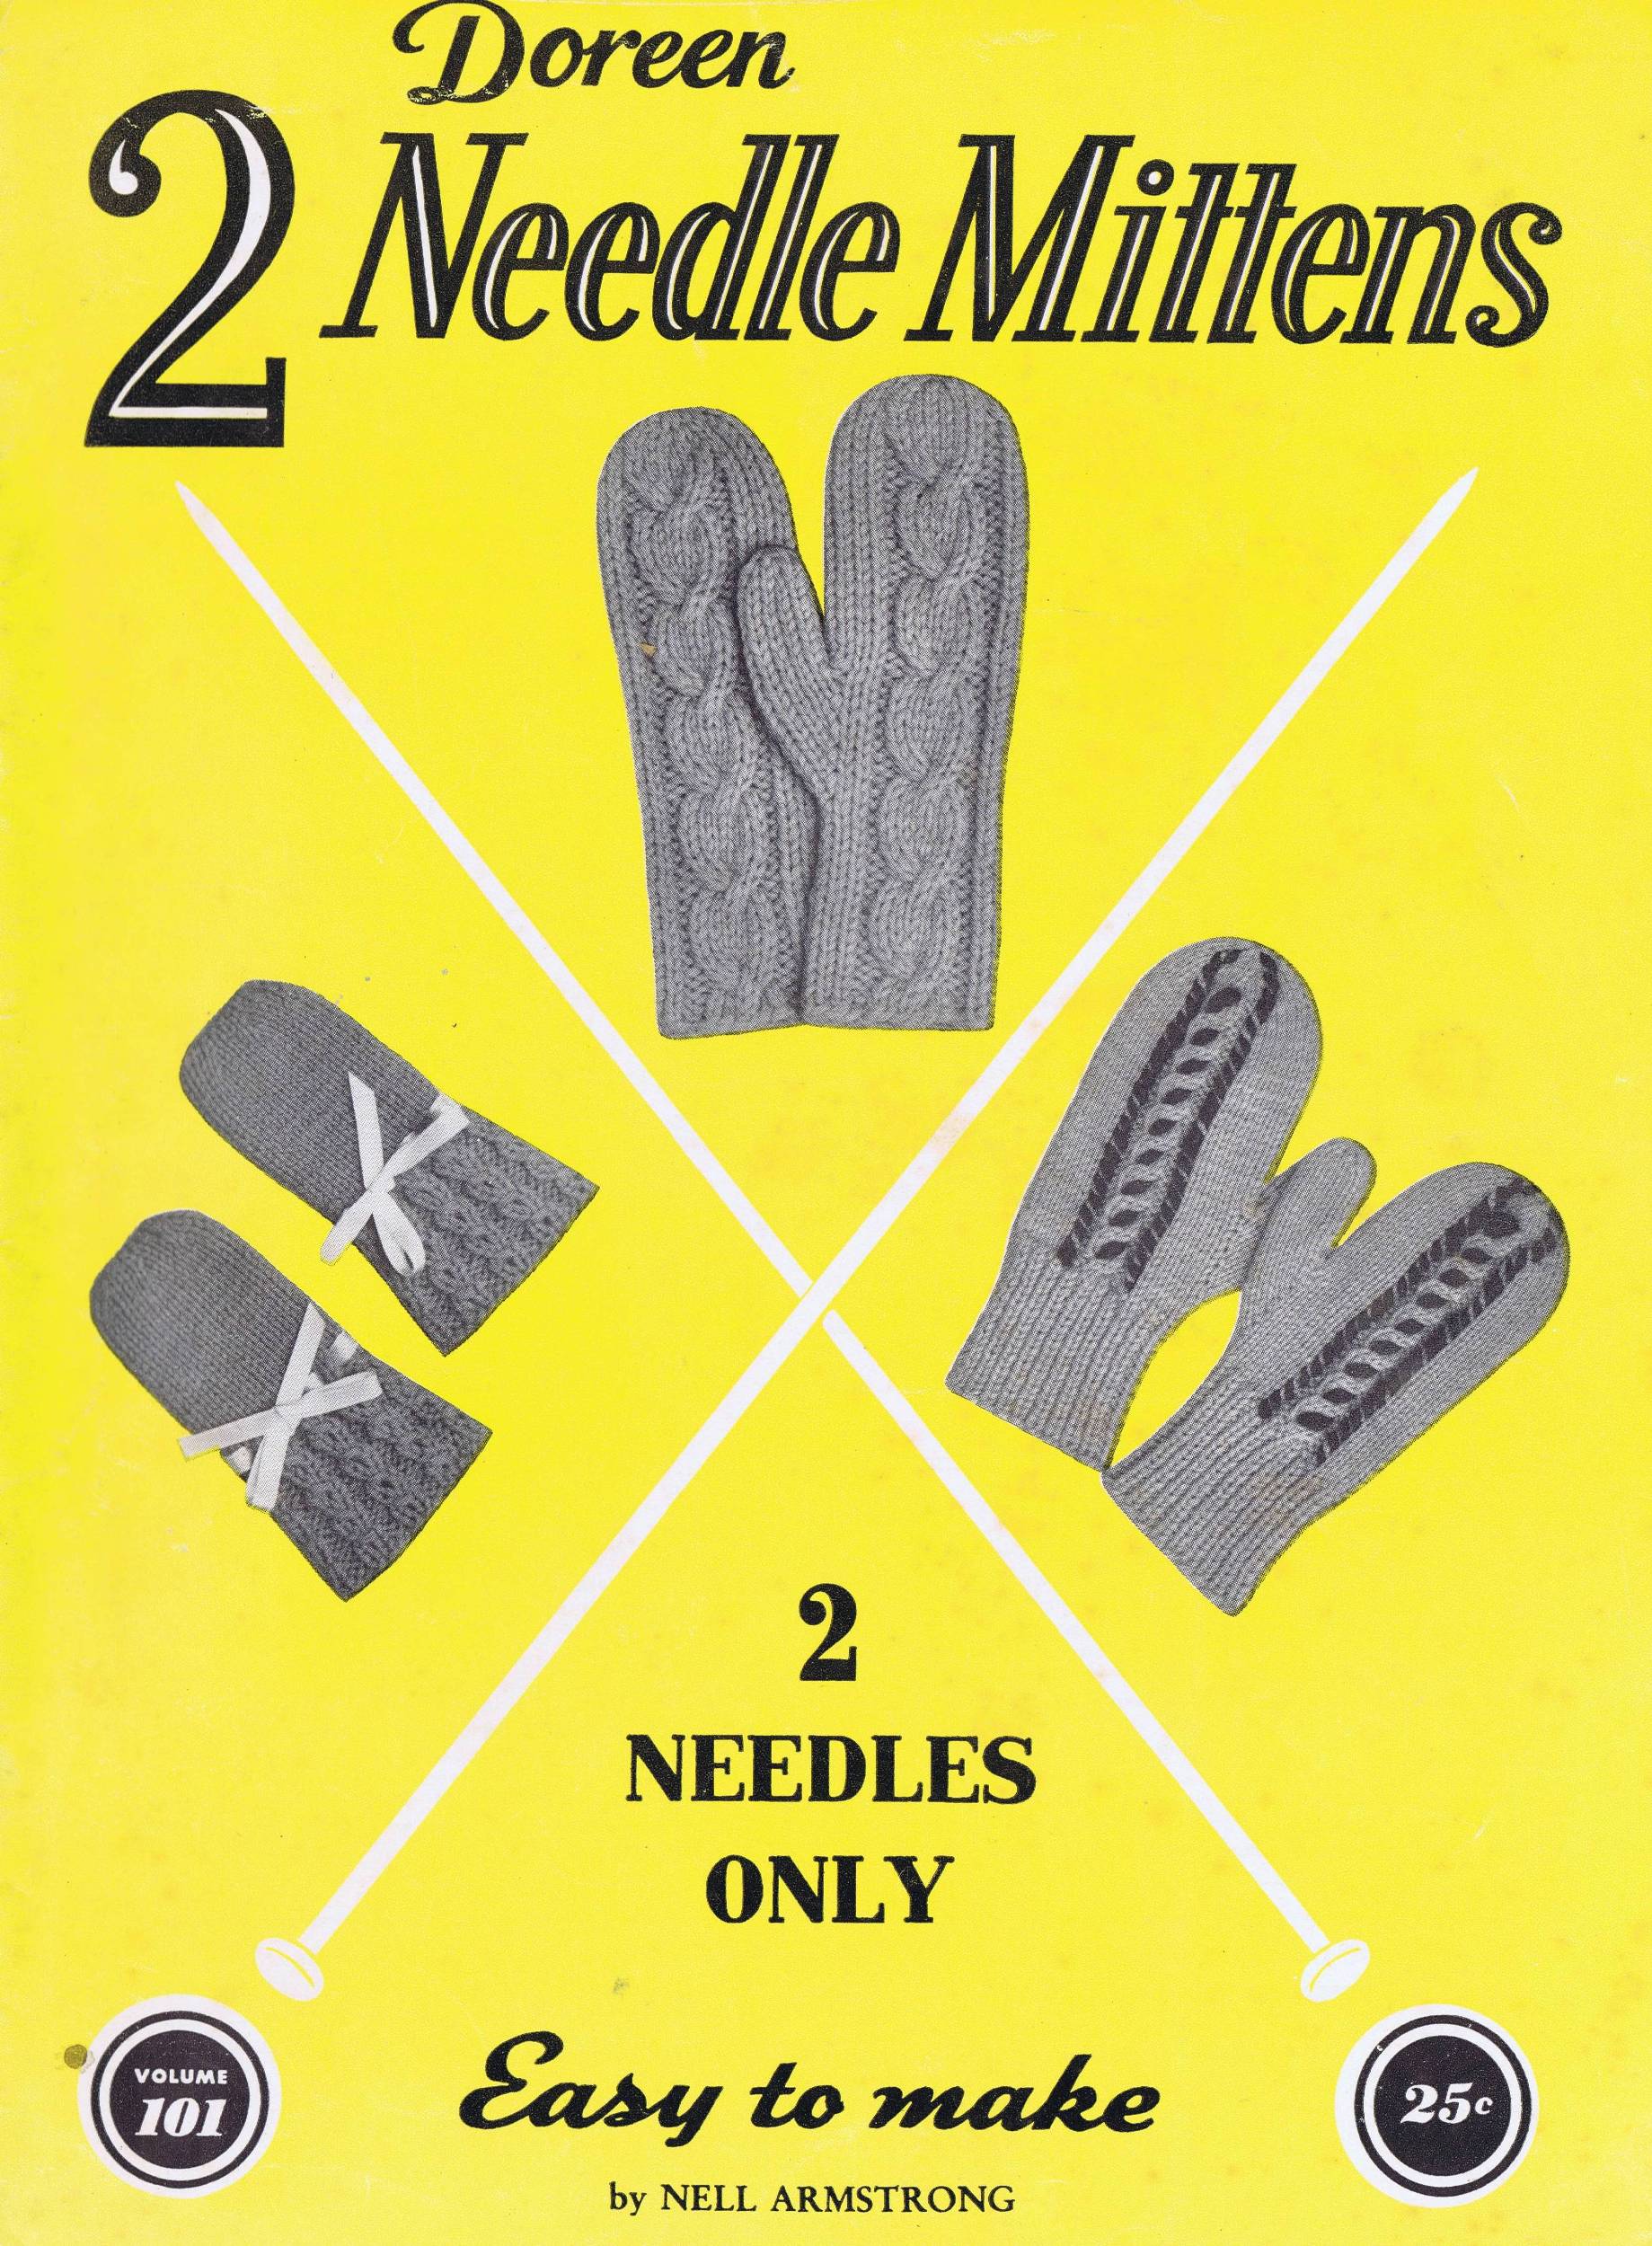 Doreen 2 Needle Mittens Vintage Knitting Patterns